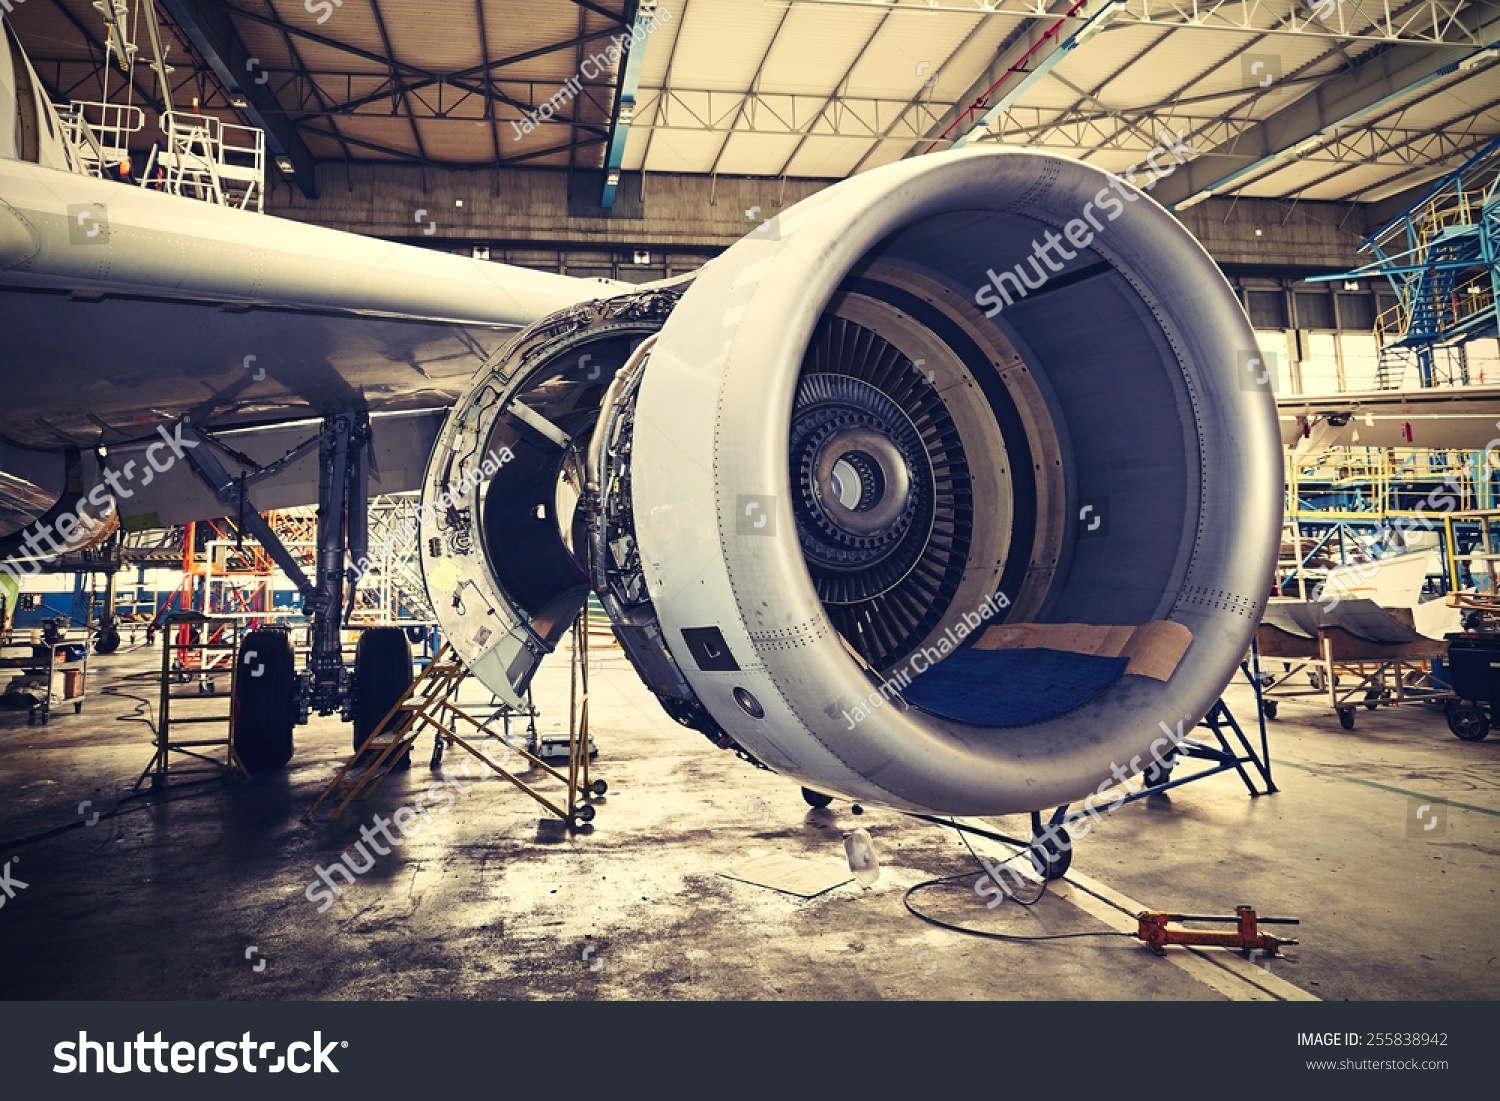 Engine of the airplane under heavy maintenance #255838942